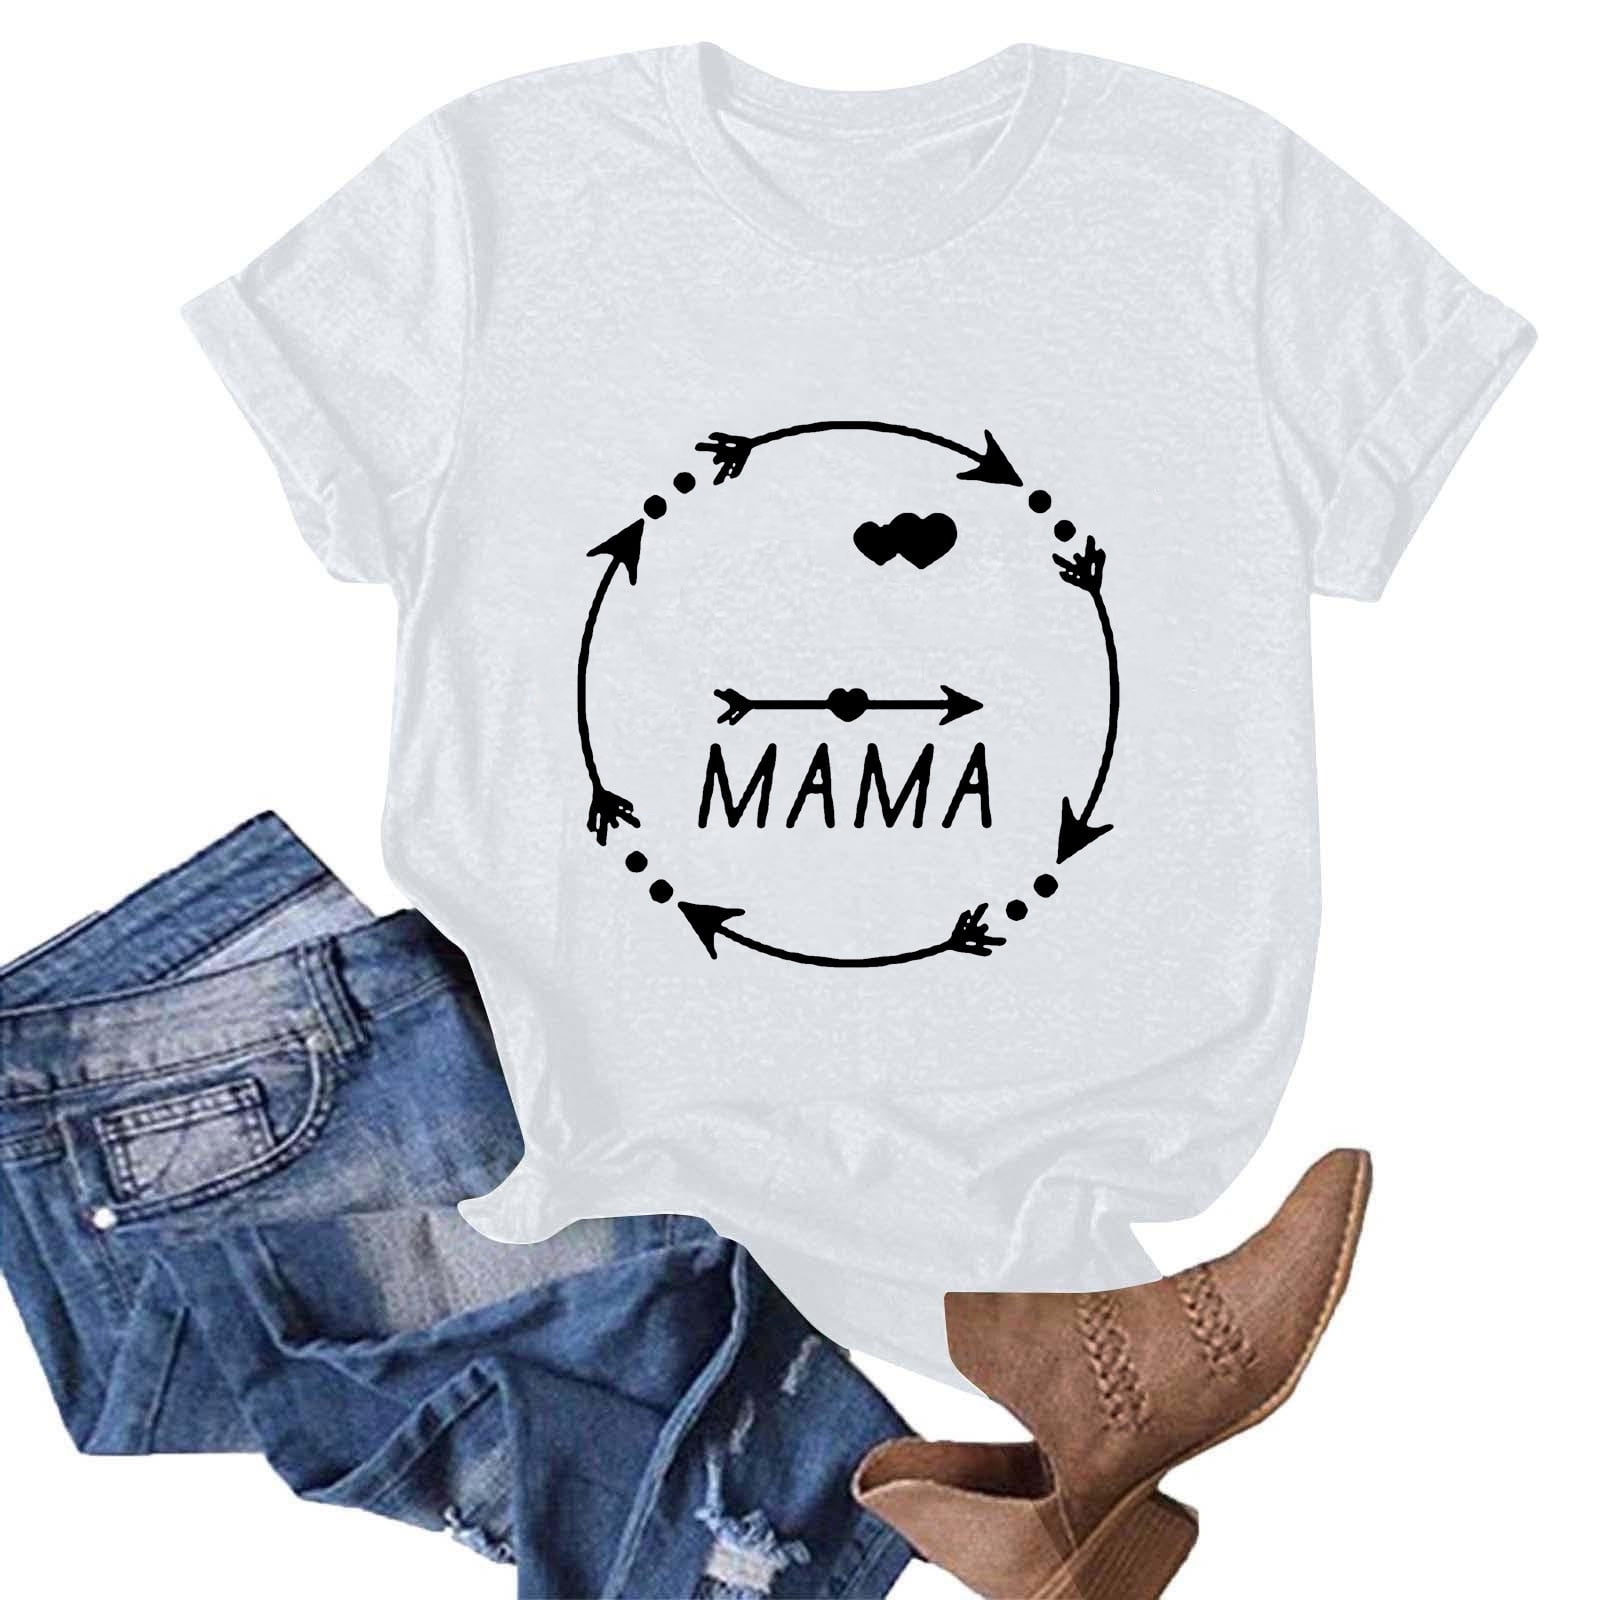 Aboser Summer T Shirts for Women Mama Letter Printed Tops Summer Short ...